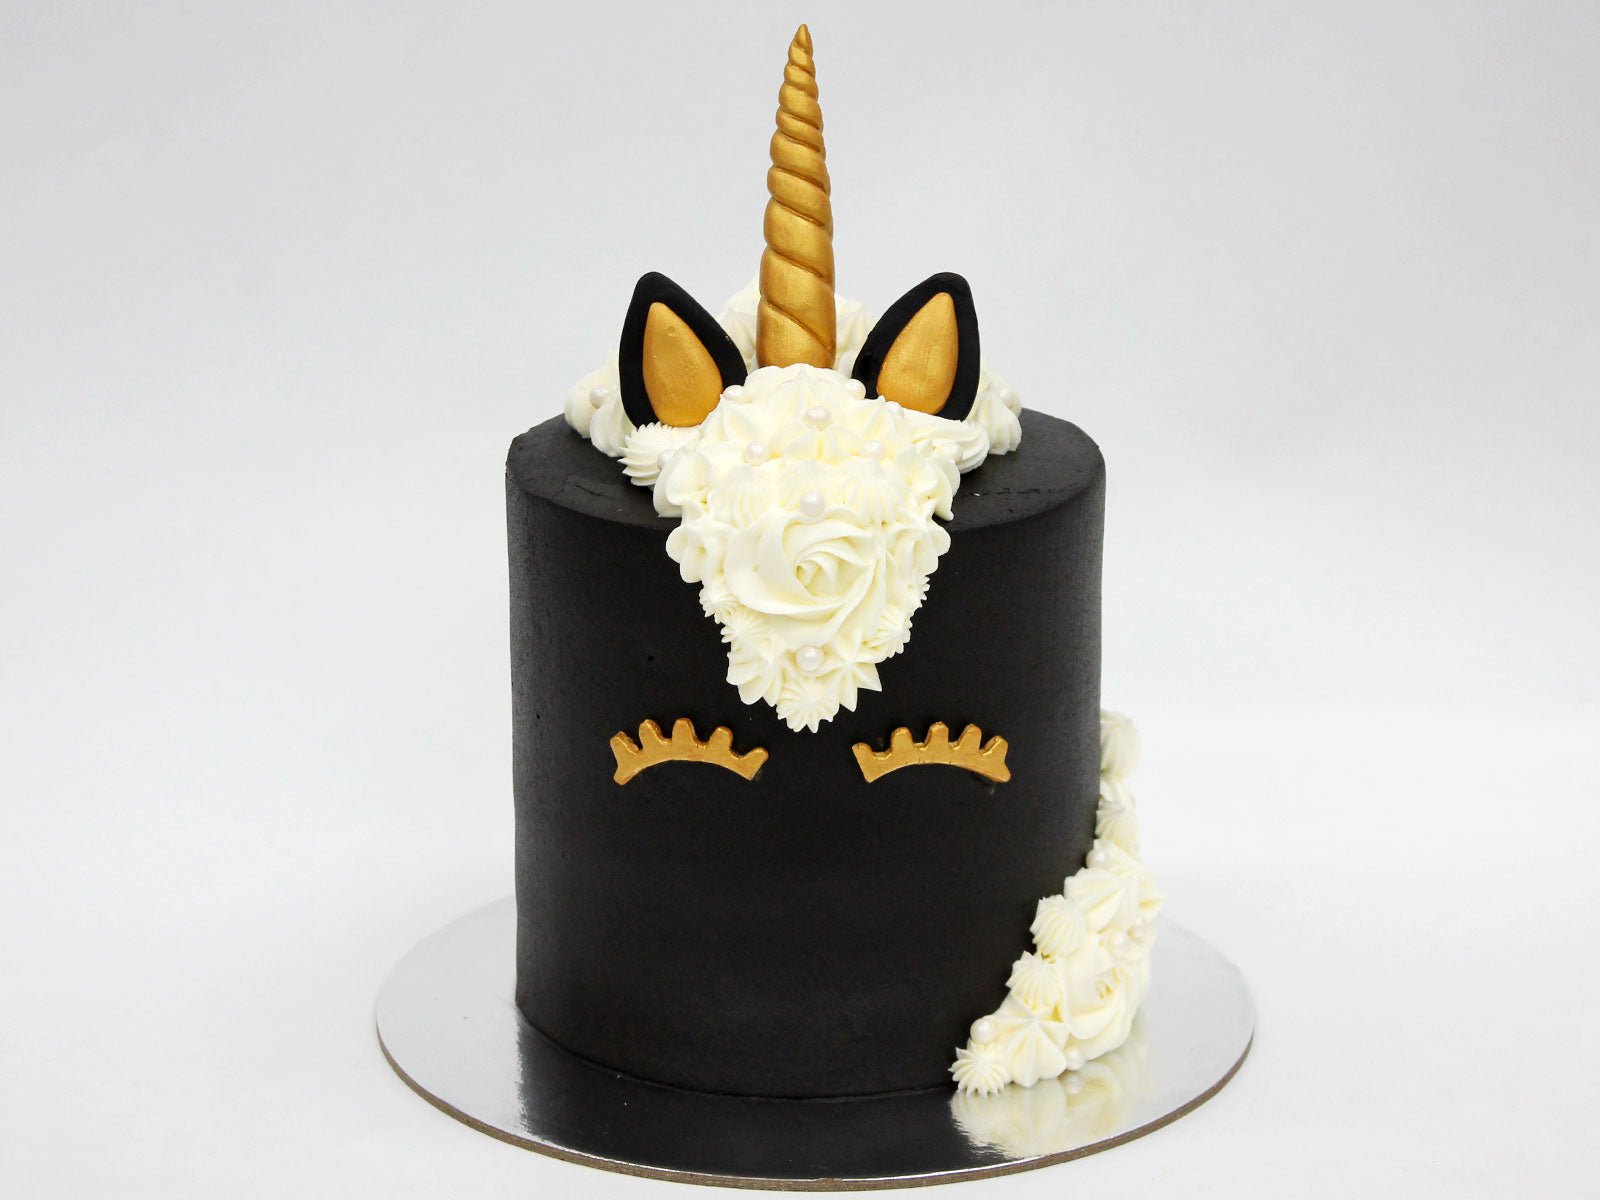 5 Whimsical Unicorn Cake Ideas | Our Baking Blog: Cake, Cookie & Dessert  Recipes by Wilton